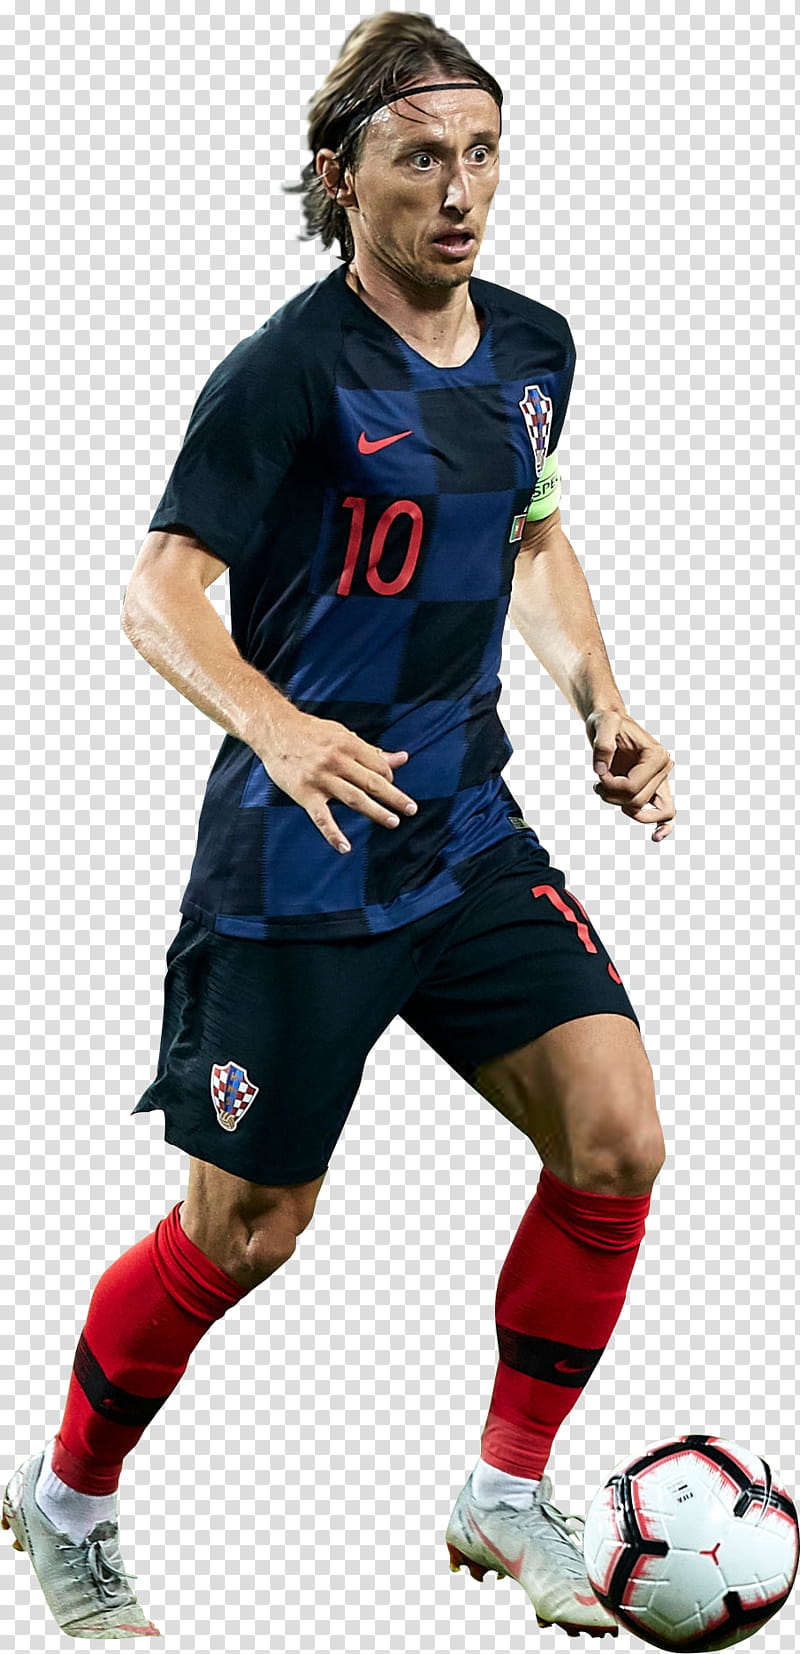 Soccer Ball, Croatia National Football Team, UEFA Euro 2016, 2018 World Cup, Football Player, England National Football Team, Sports, Team Sport transparent background PNG clipart